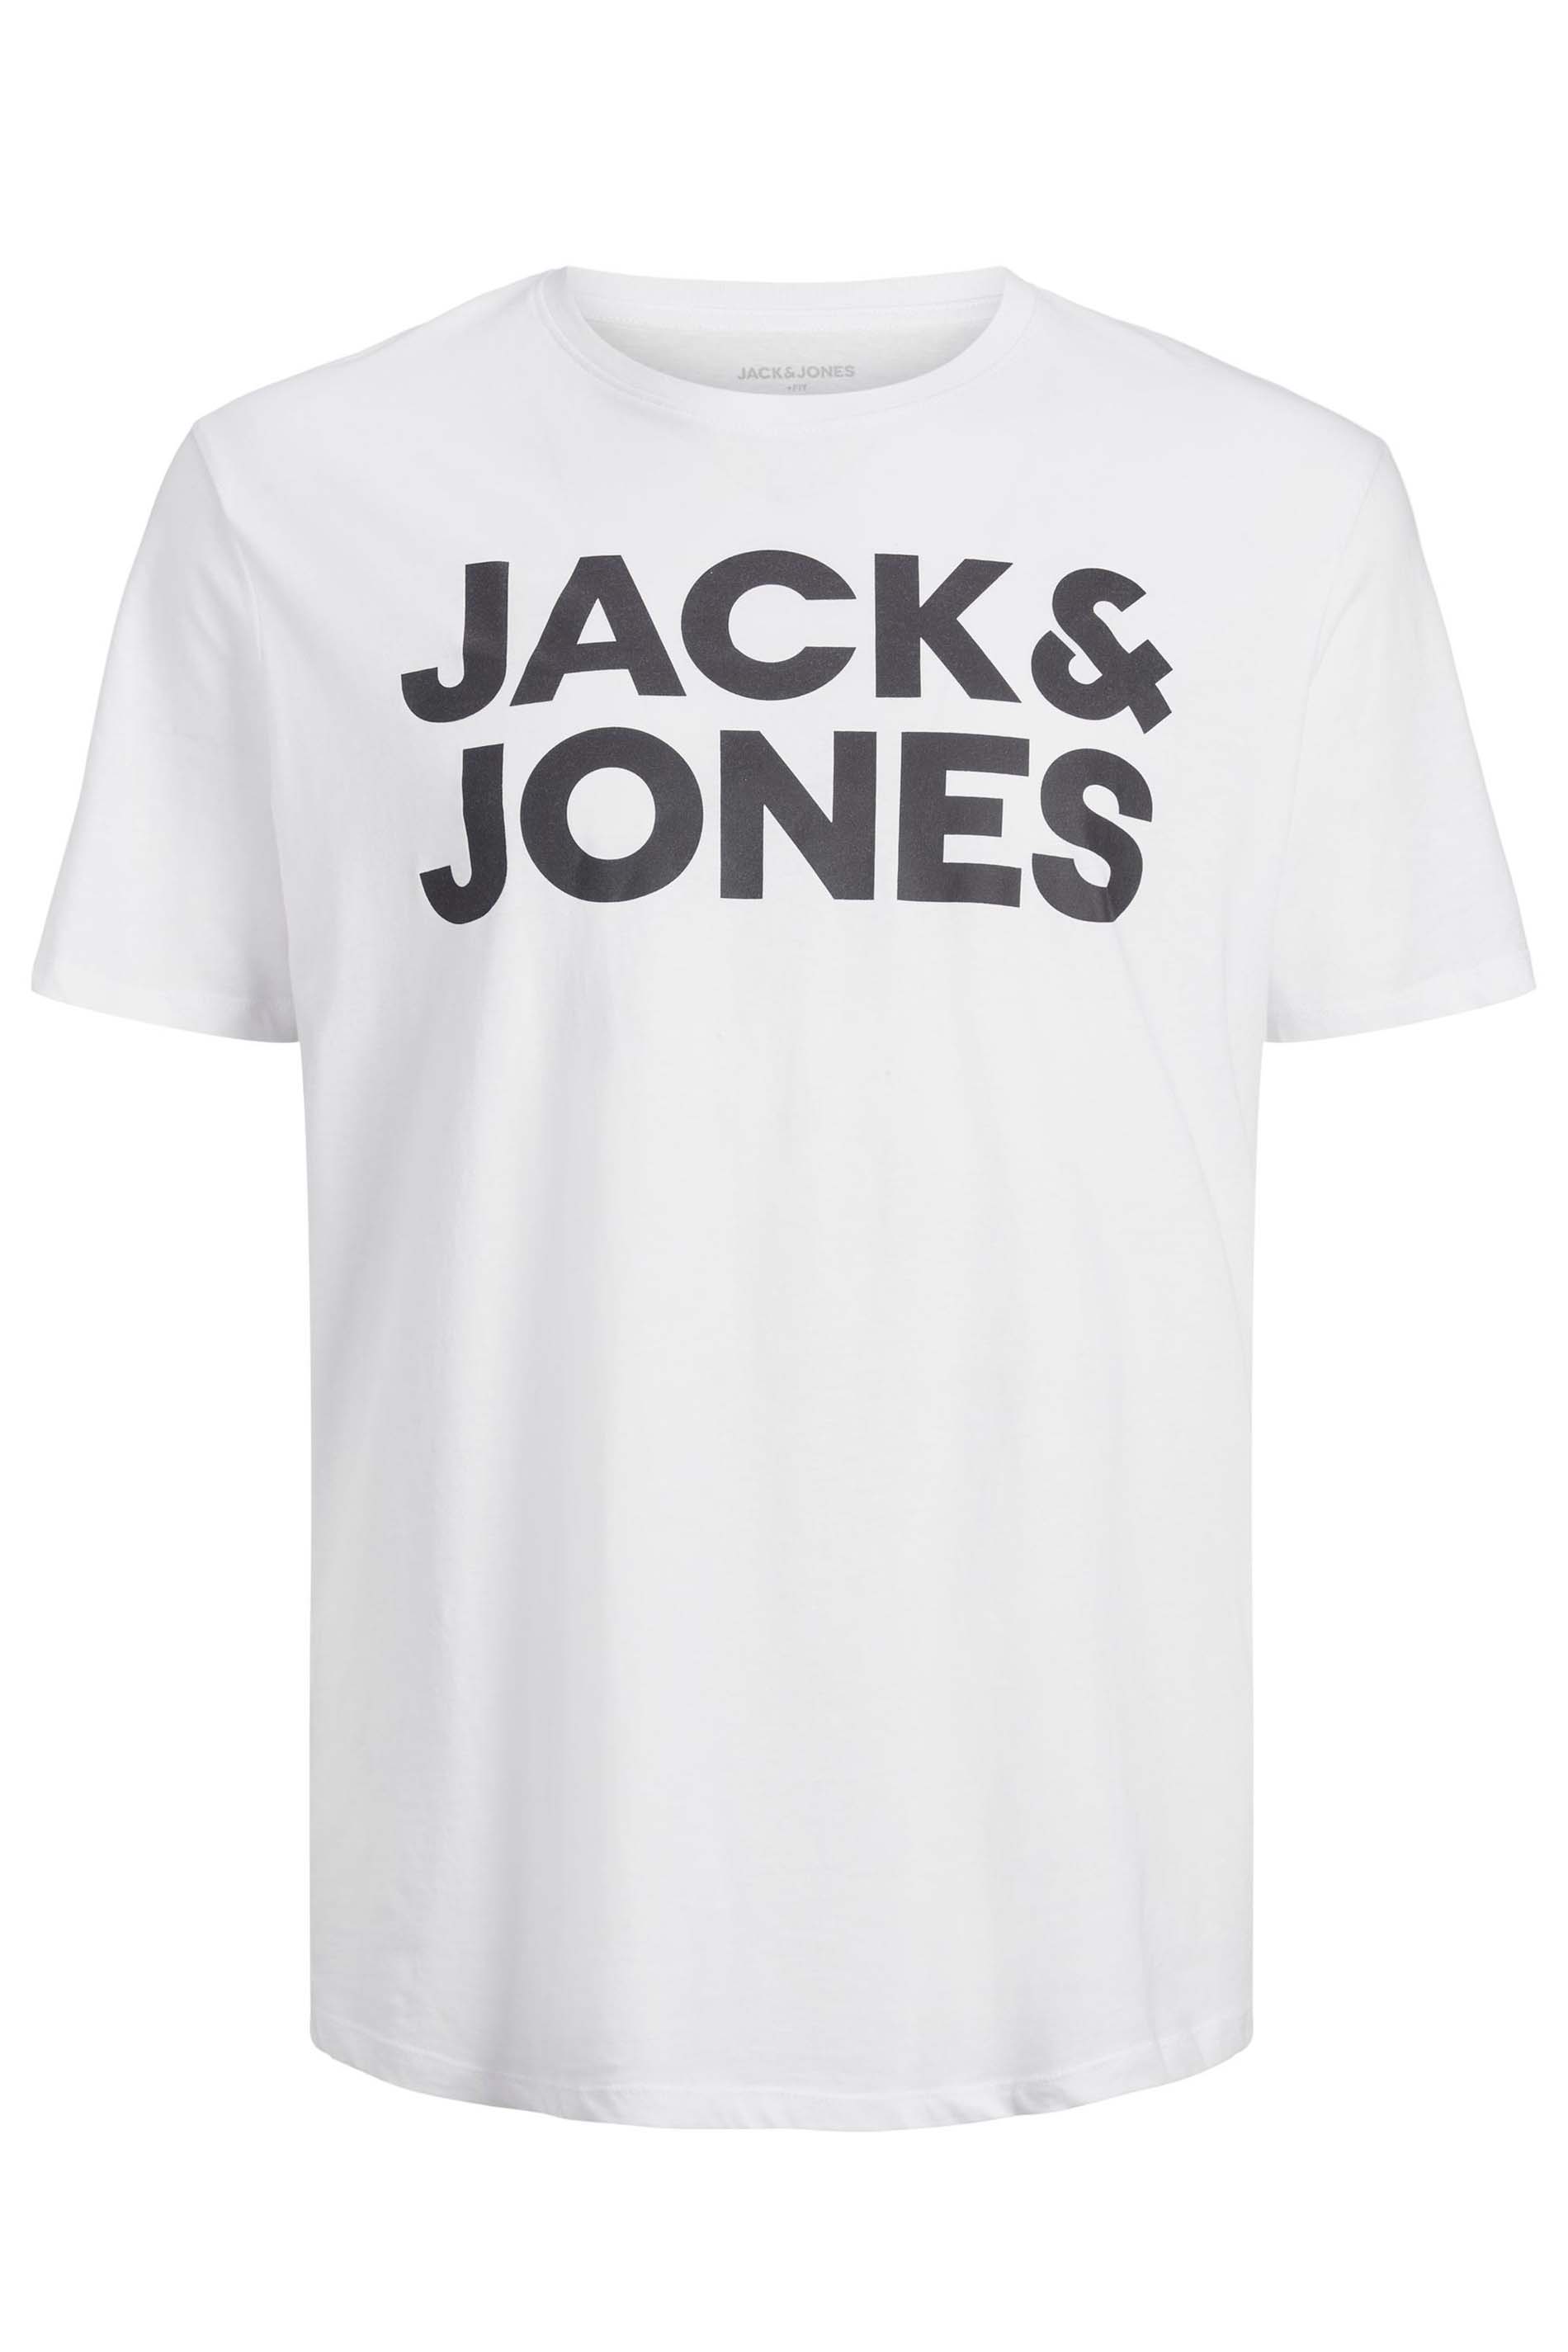 JACK & JONES Big & Tall White Logo Print T-Shirt  2